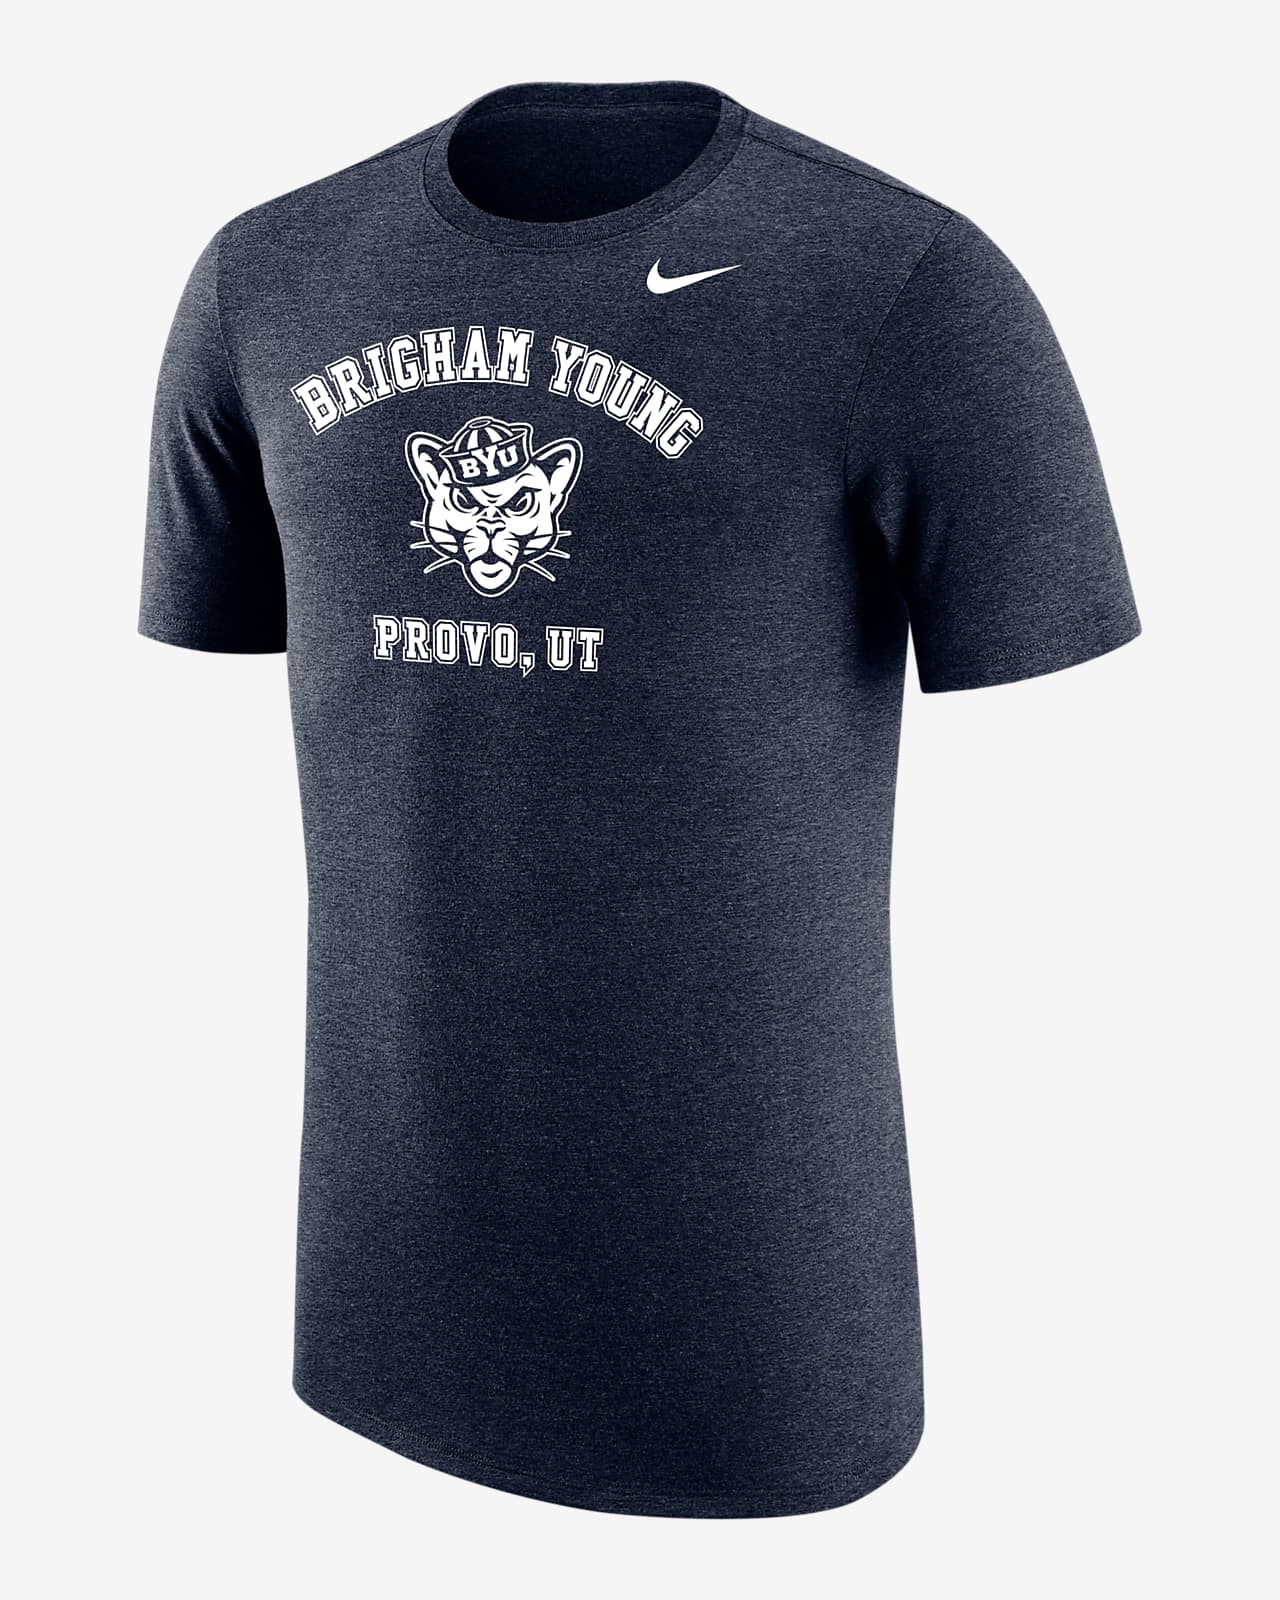 BYU Men's Nike College T-Shirt